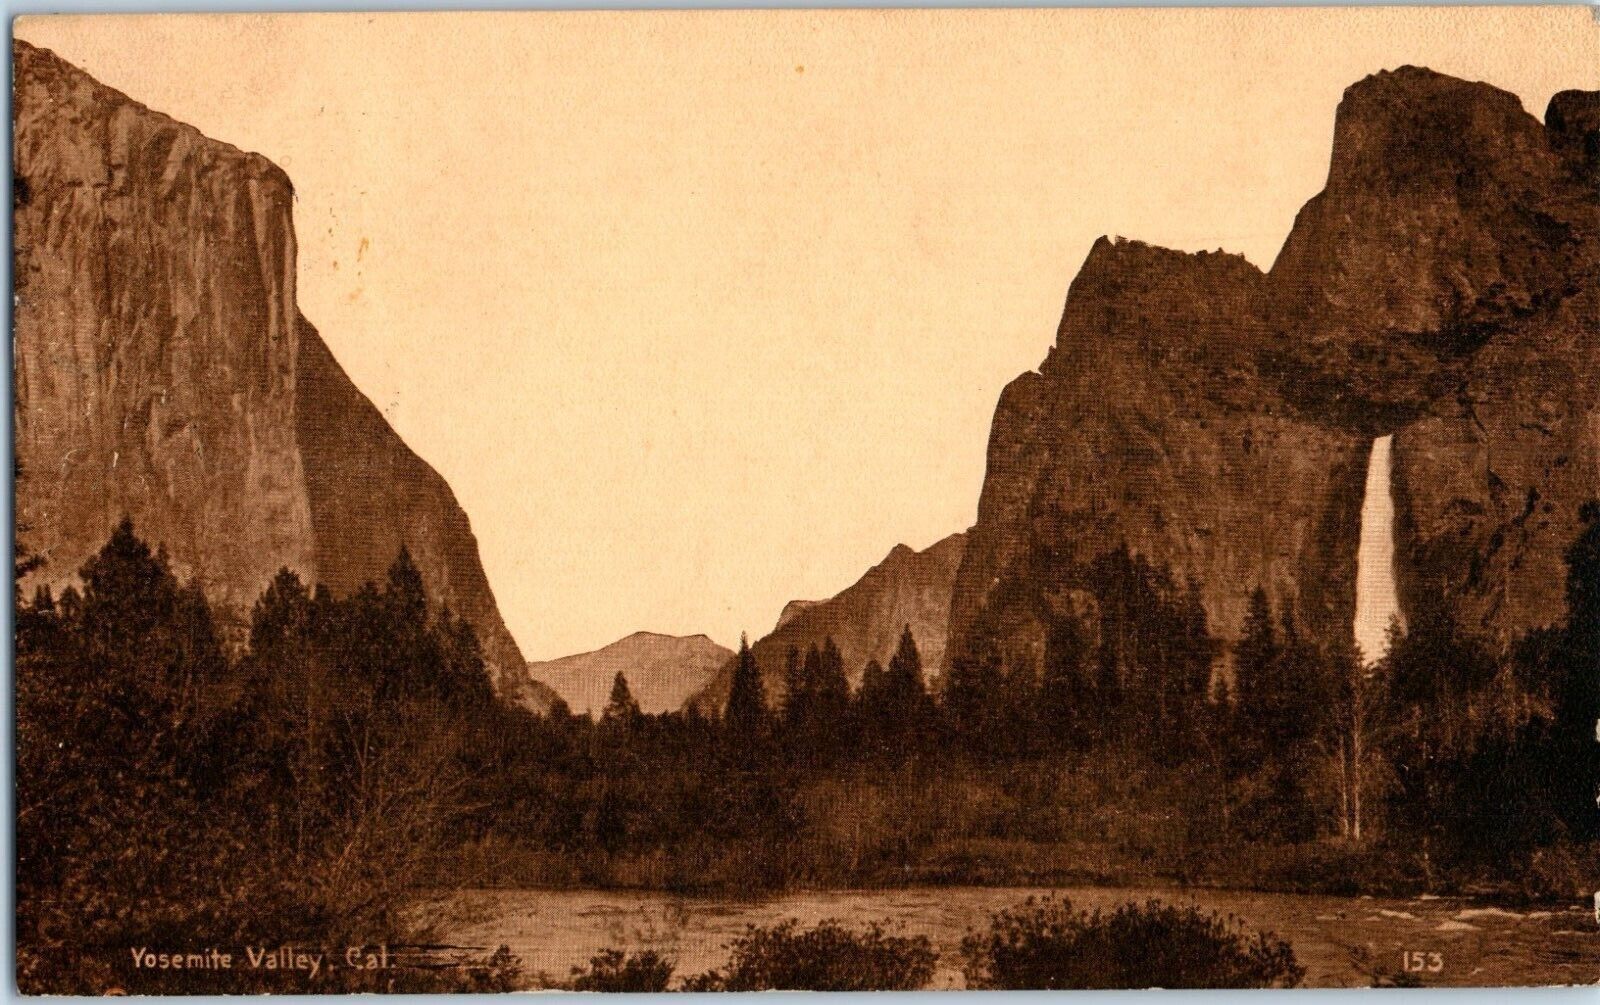 1921 Vintage RRPC Real Photo Postcard Yosemite Valley California  Trees Rocks